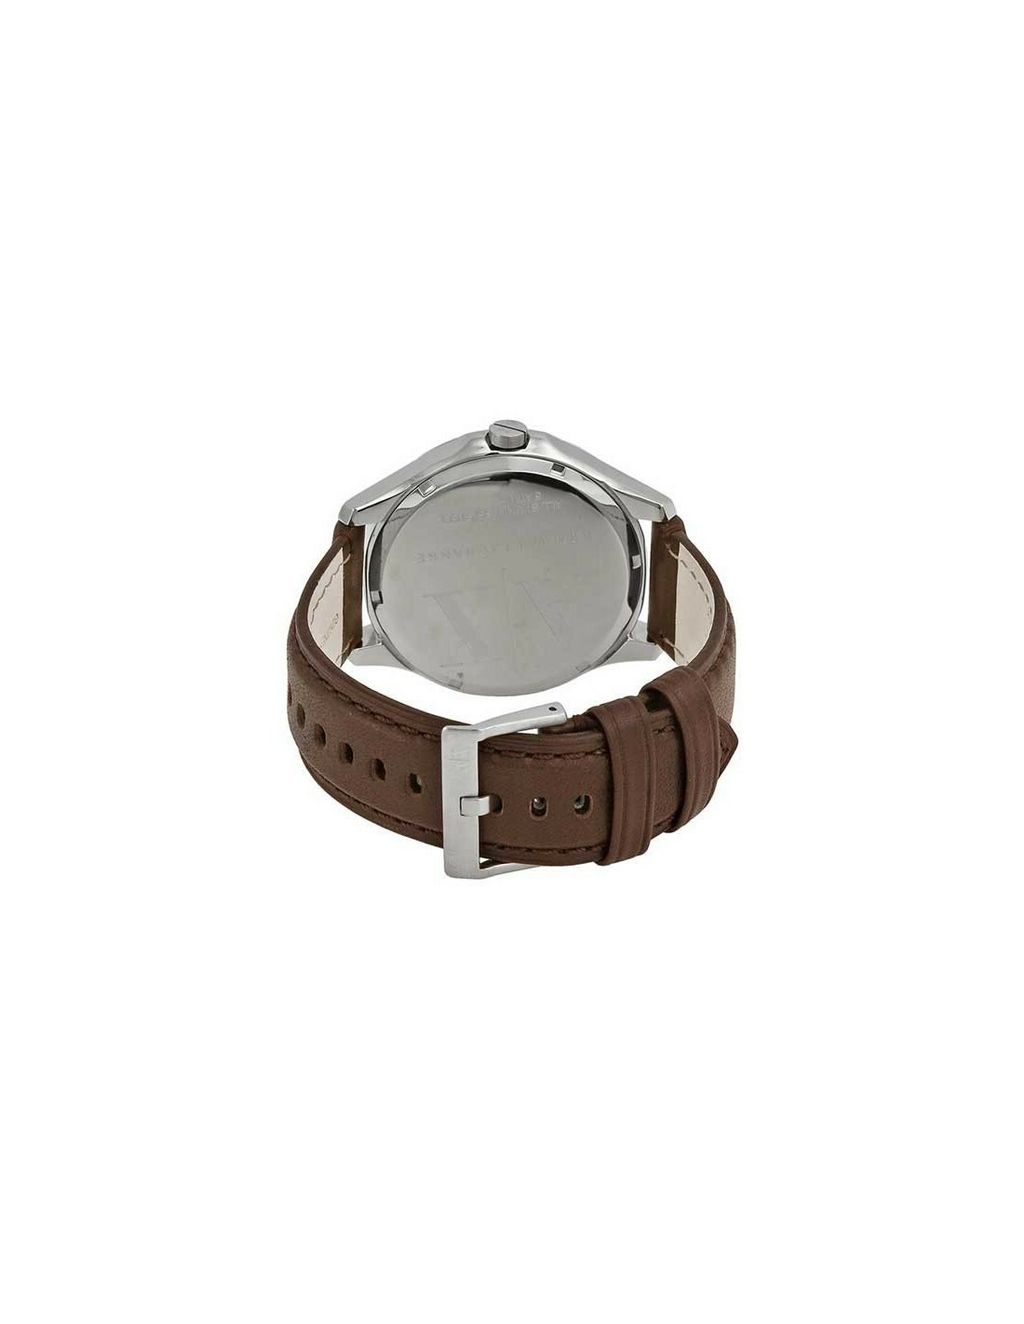 Armani Exchange AX2100 Whitman Silver Dial Brown Leather Watch Malaysia